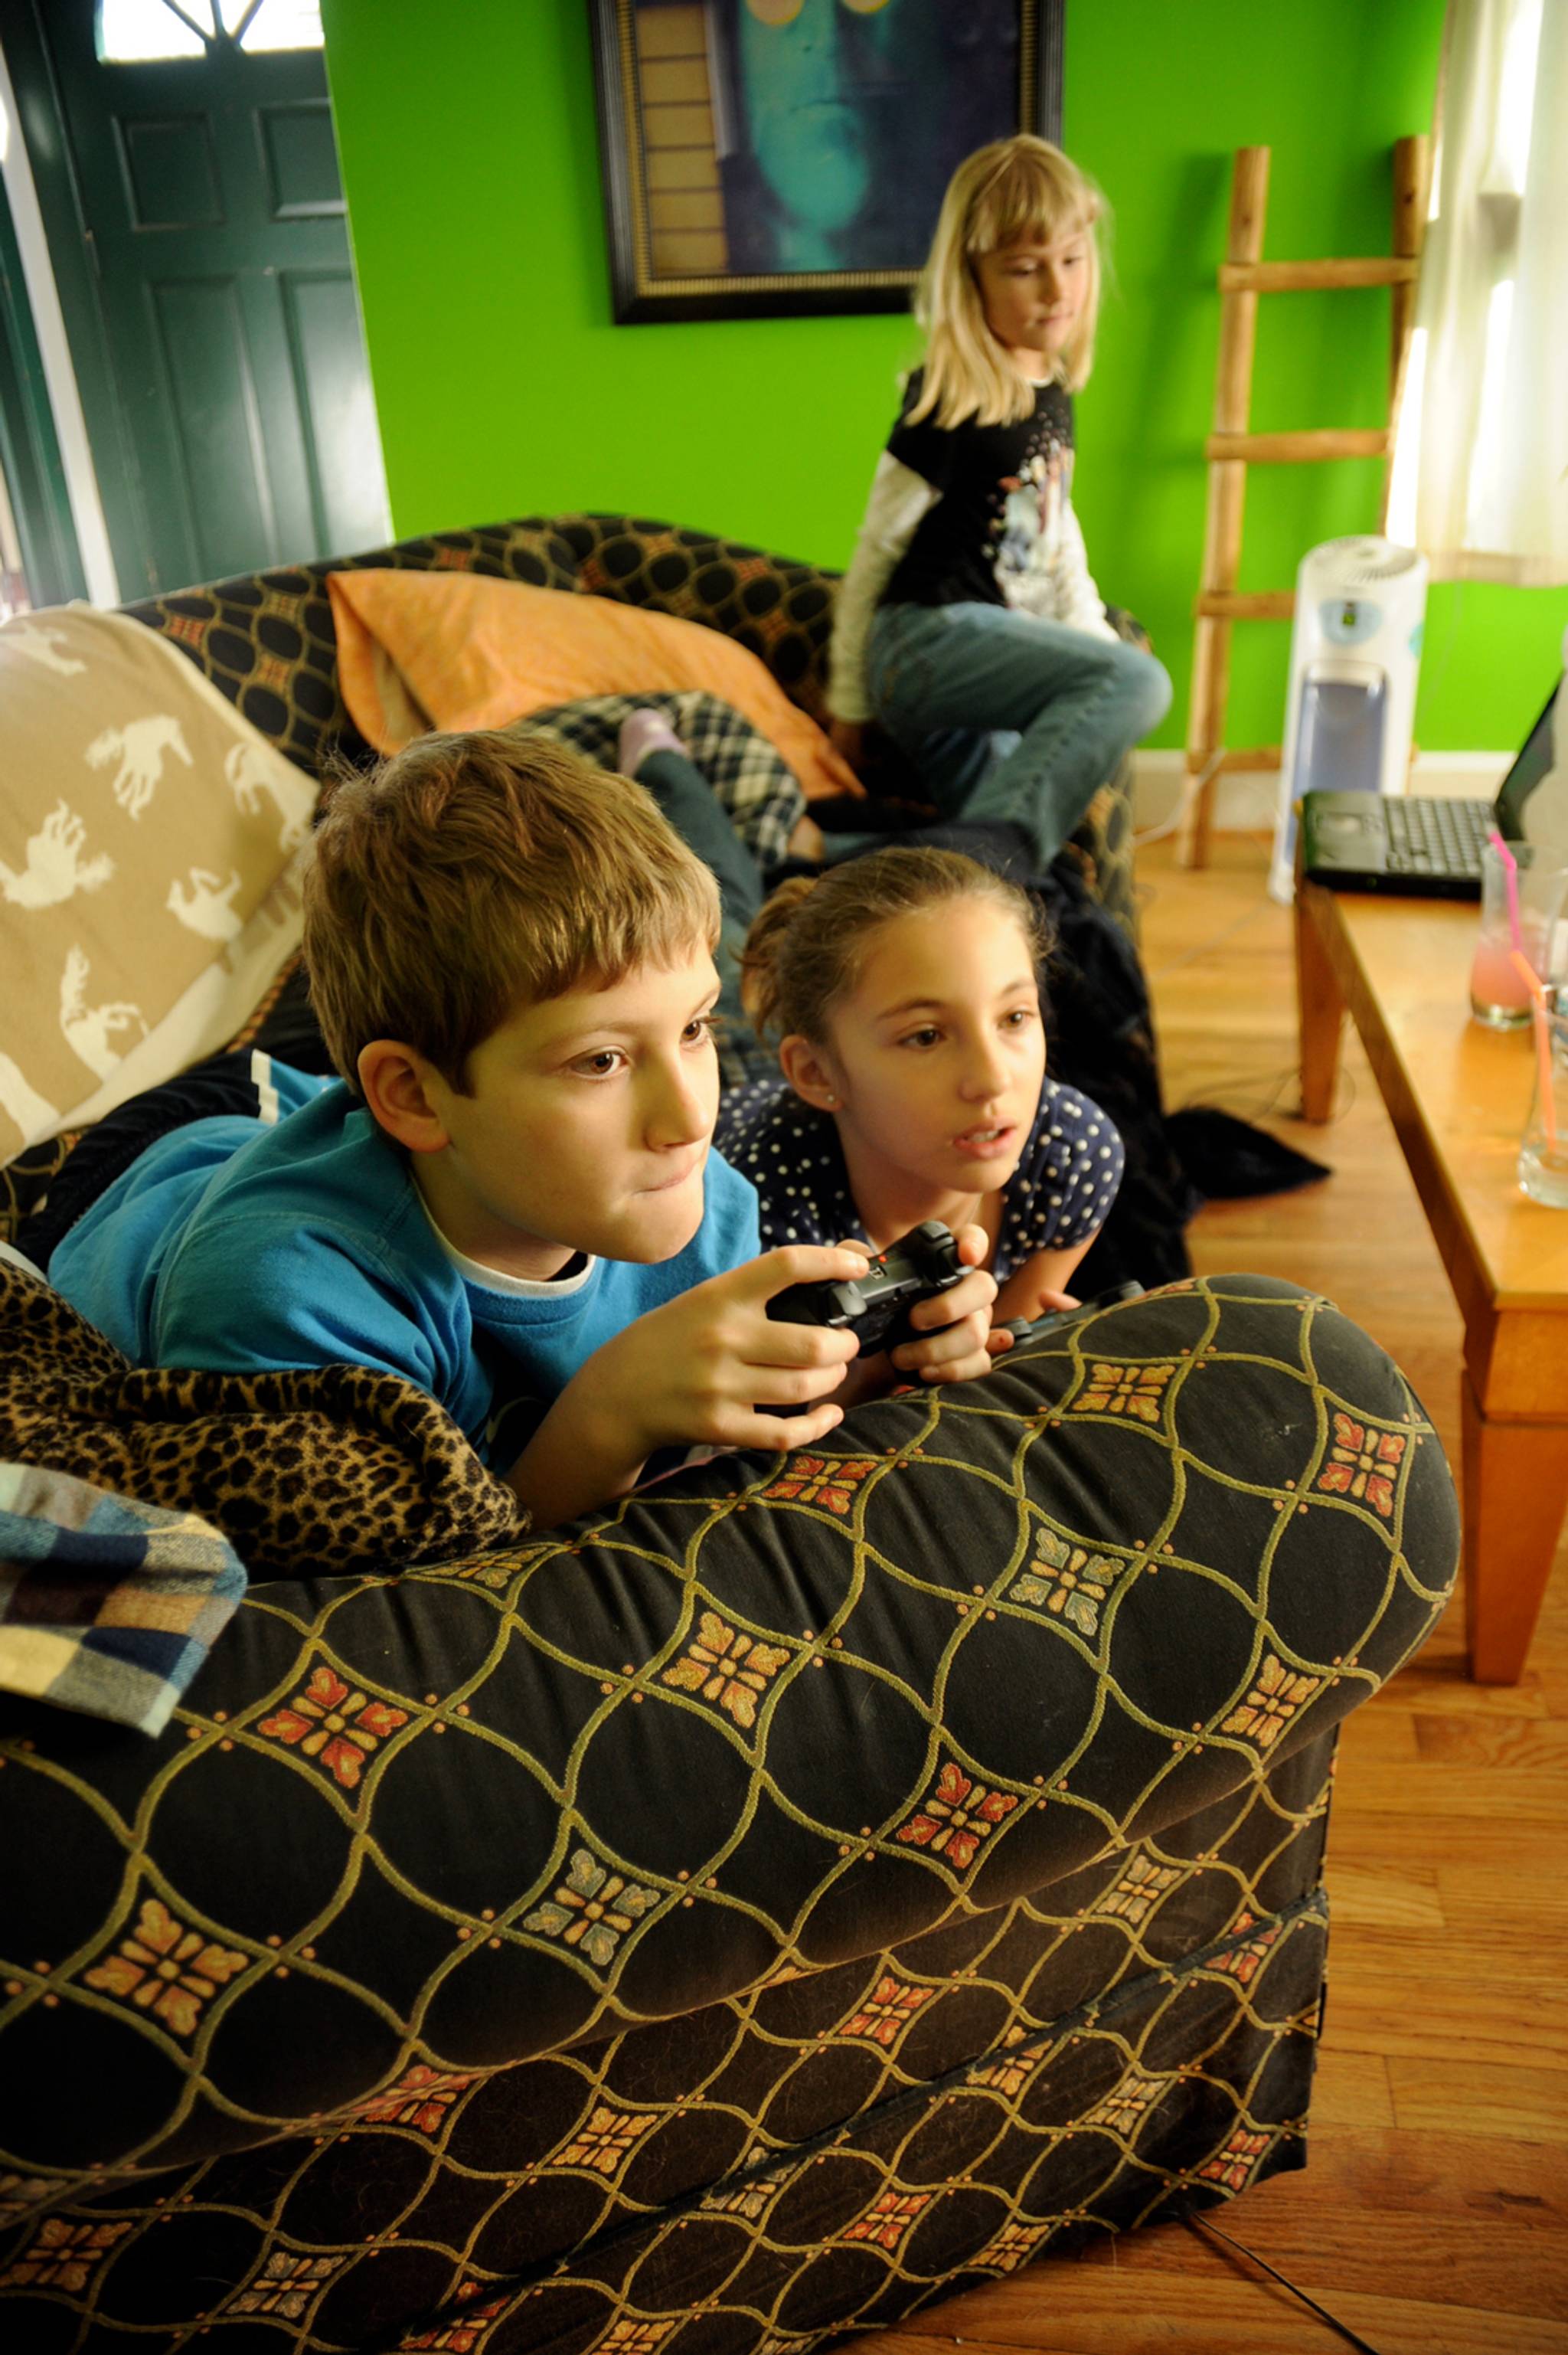 Violent video games aren't as bad as parents think